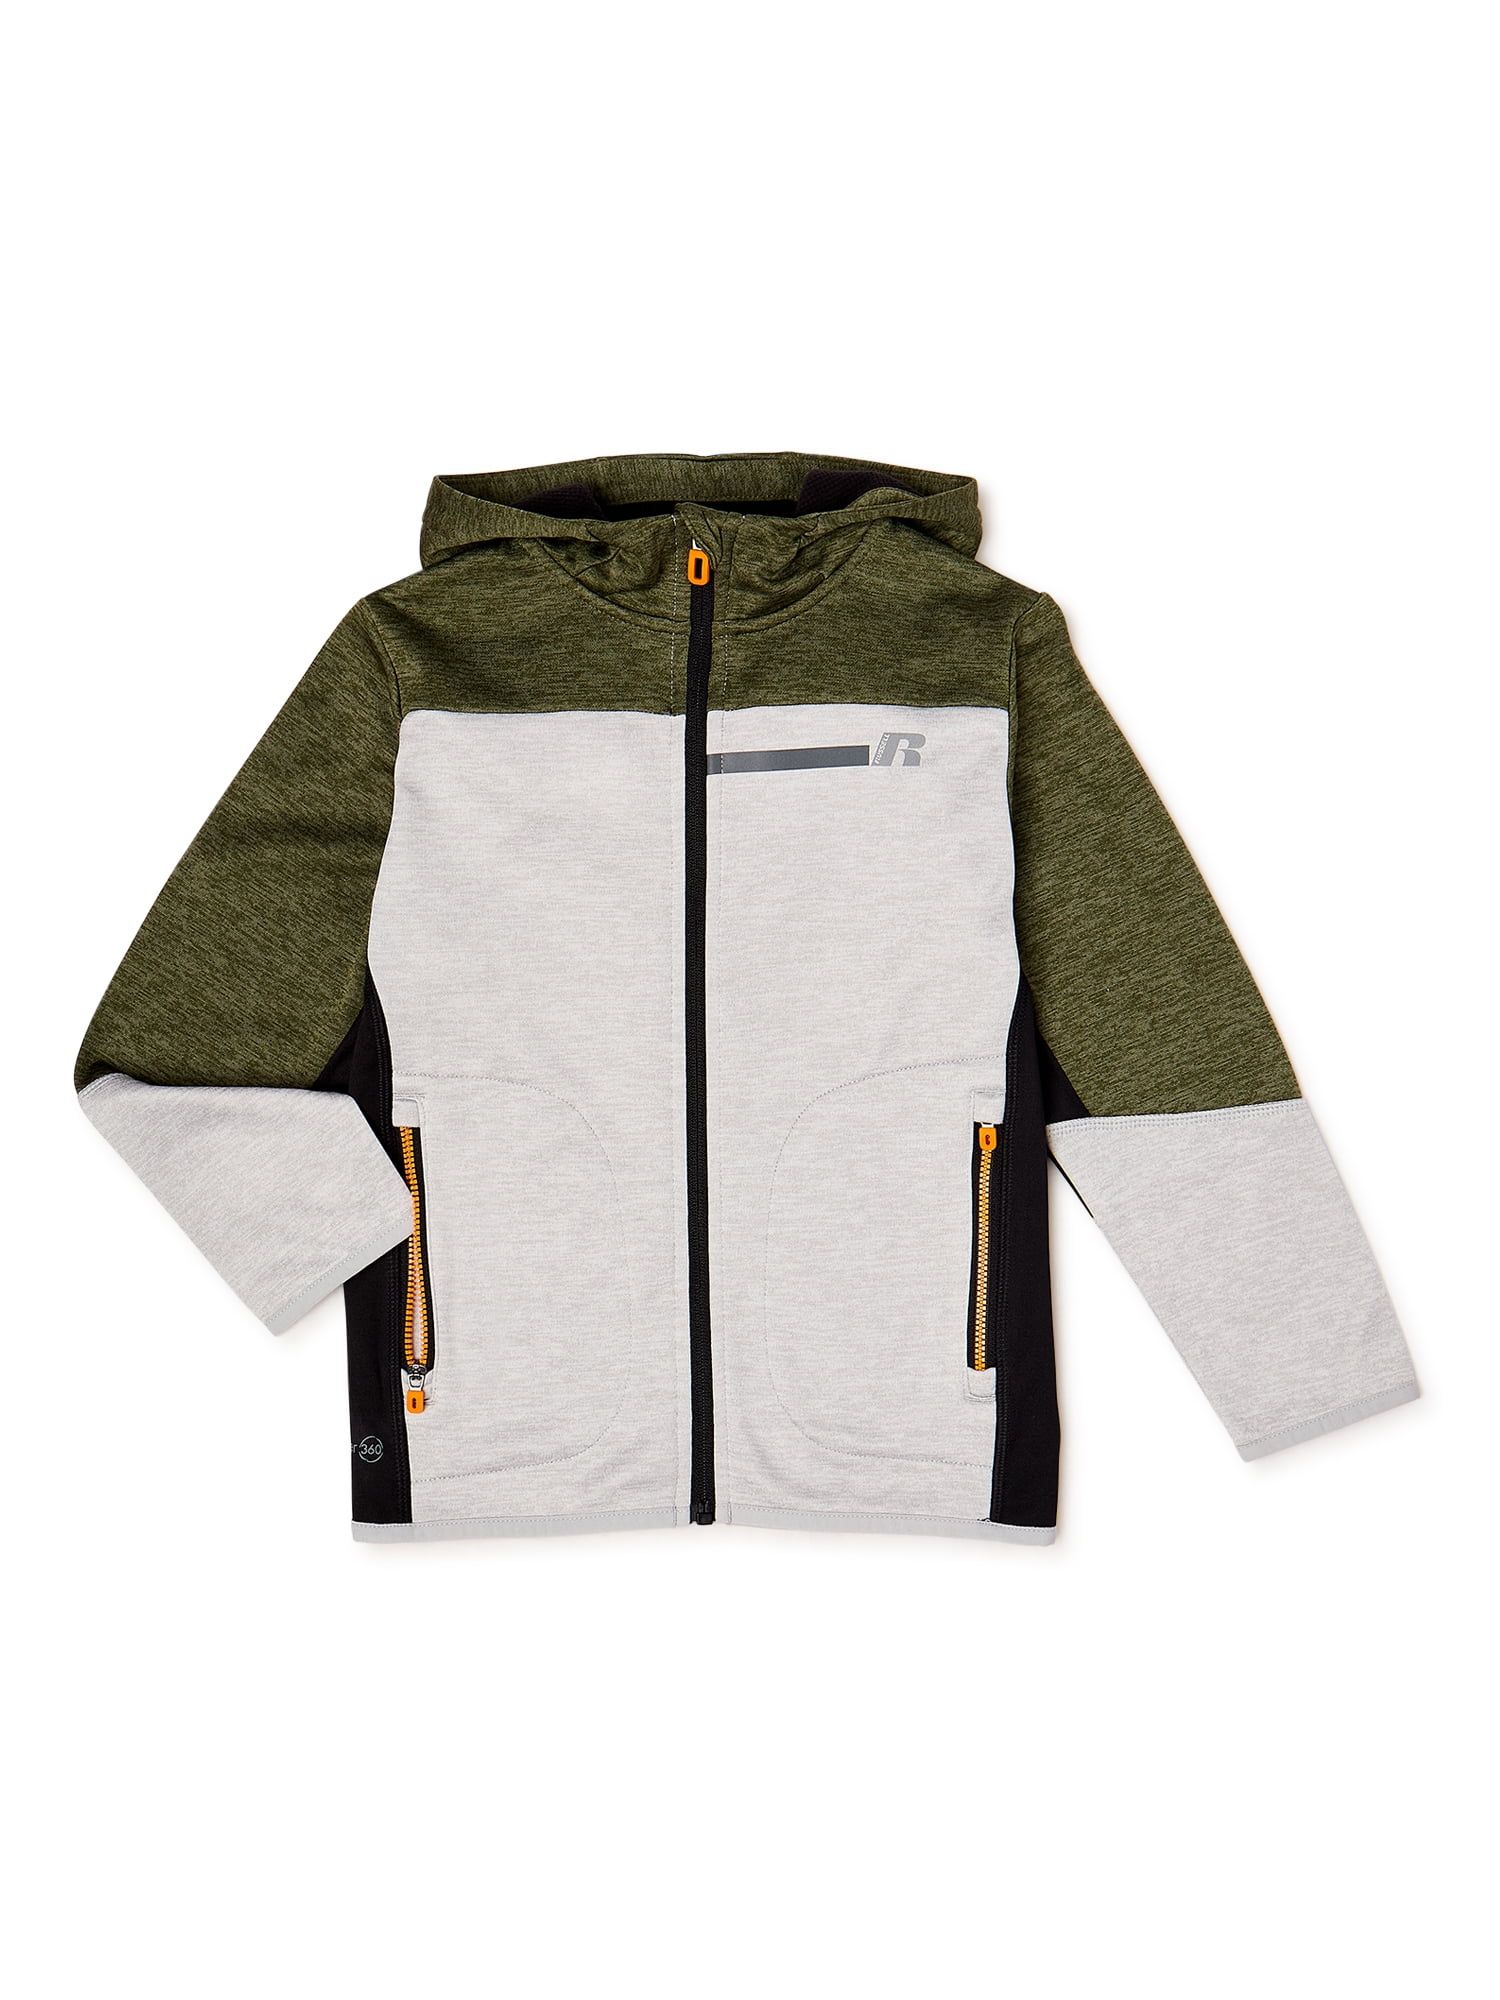 Russell Boys Tech Fleece Jacket, Sizes 4-18 | Walmart (US)